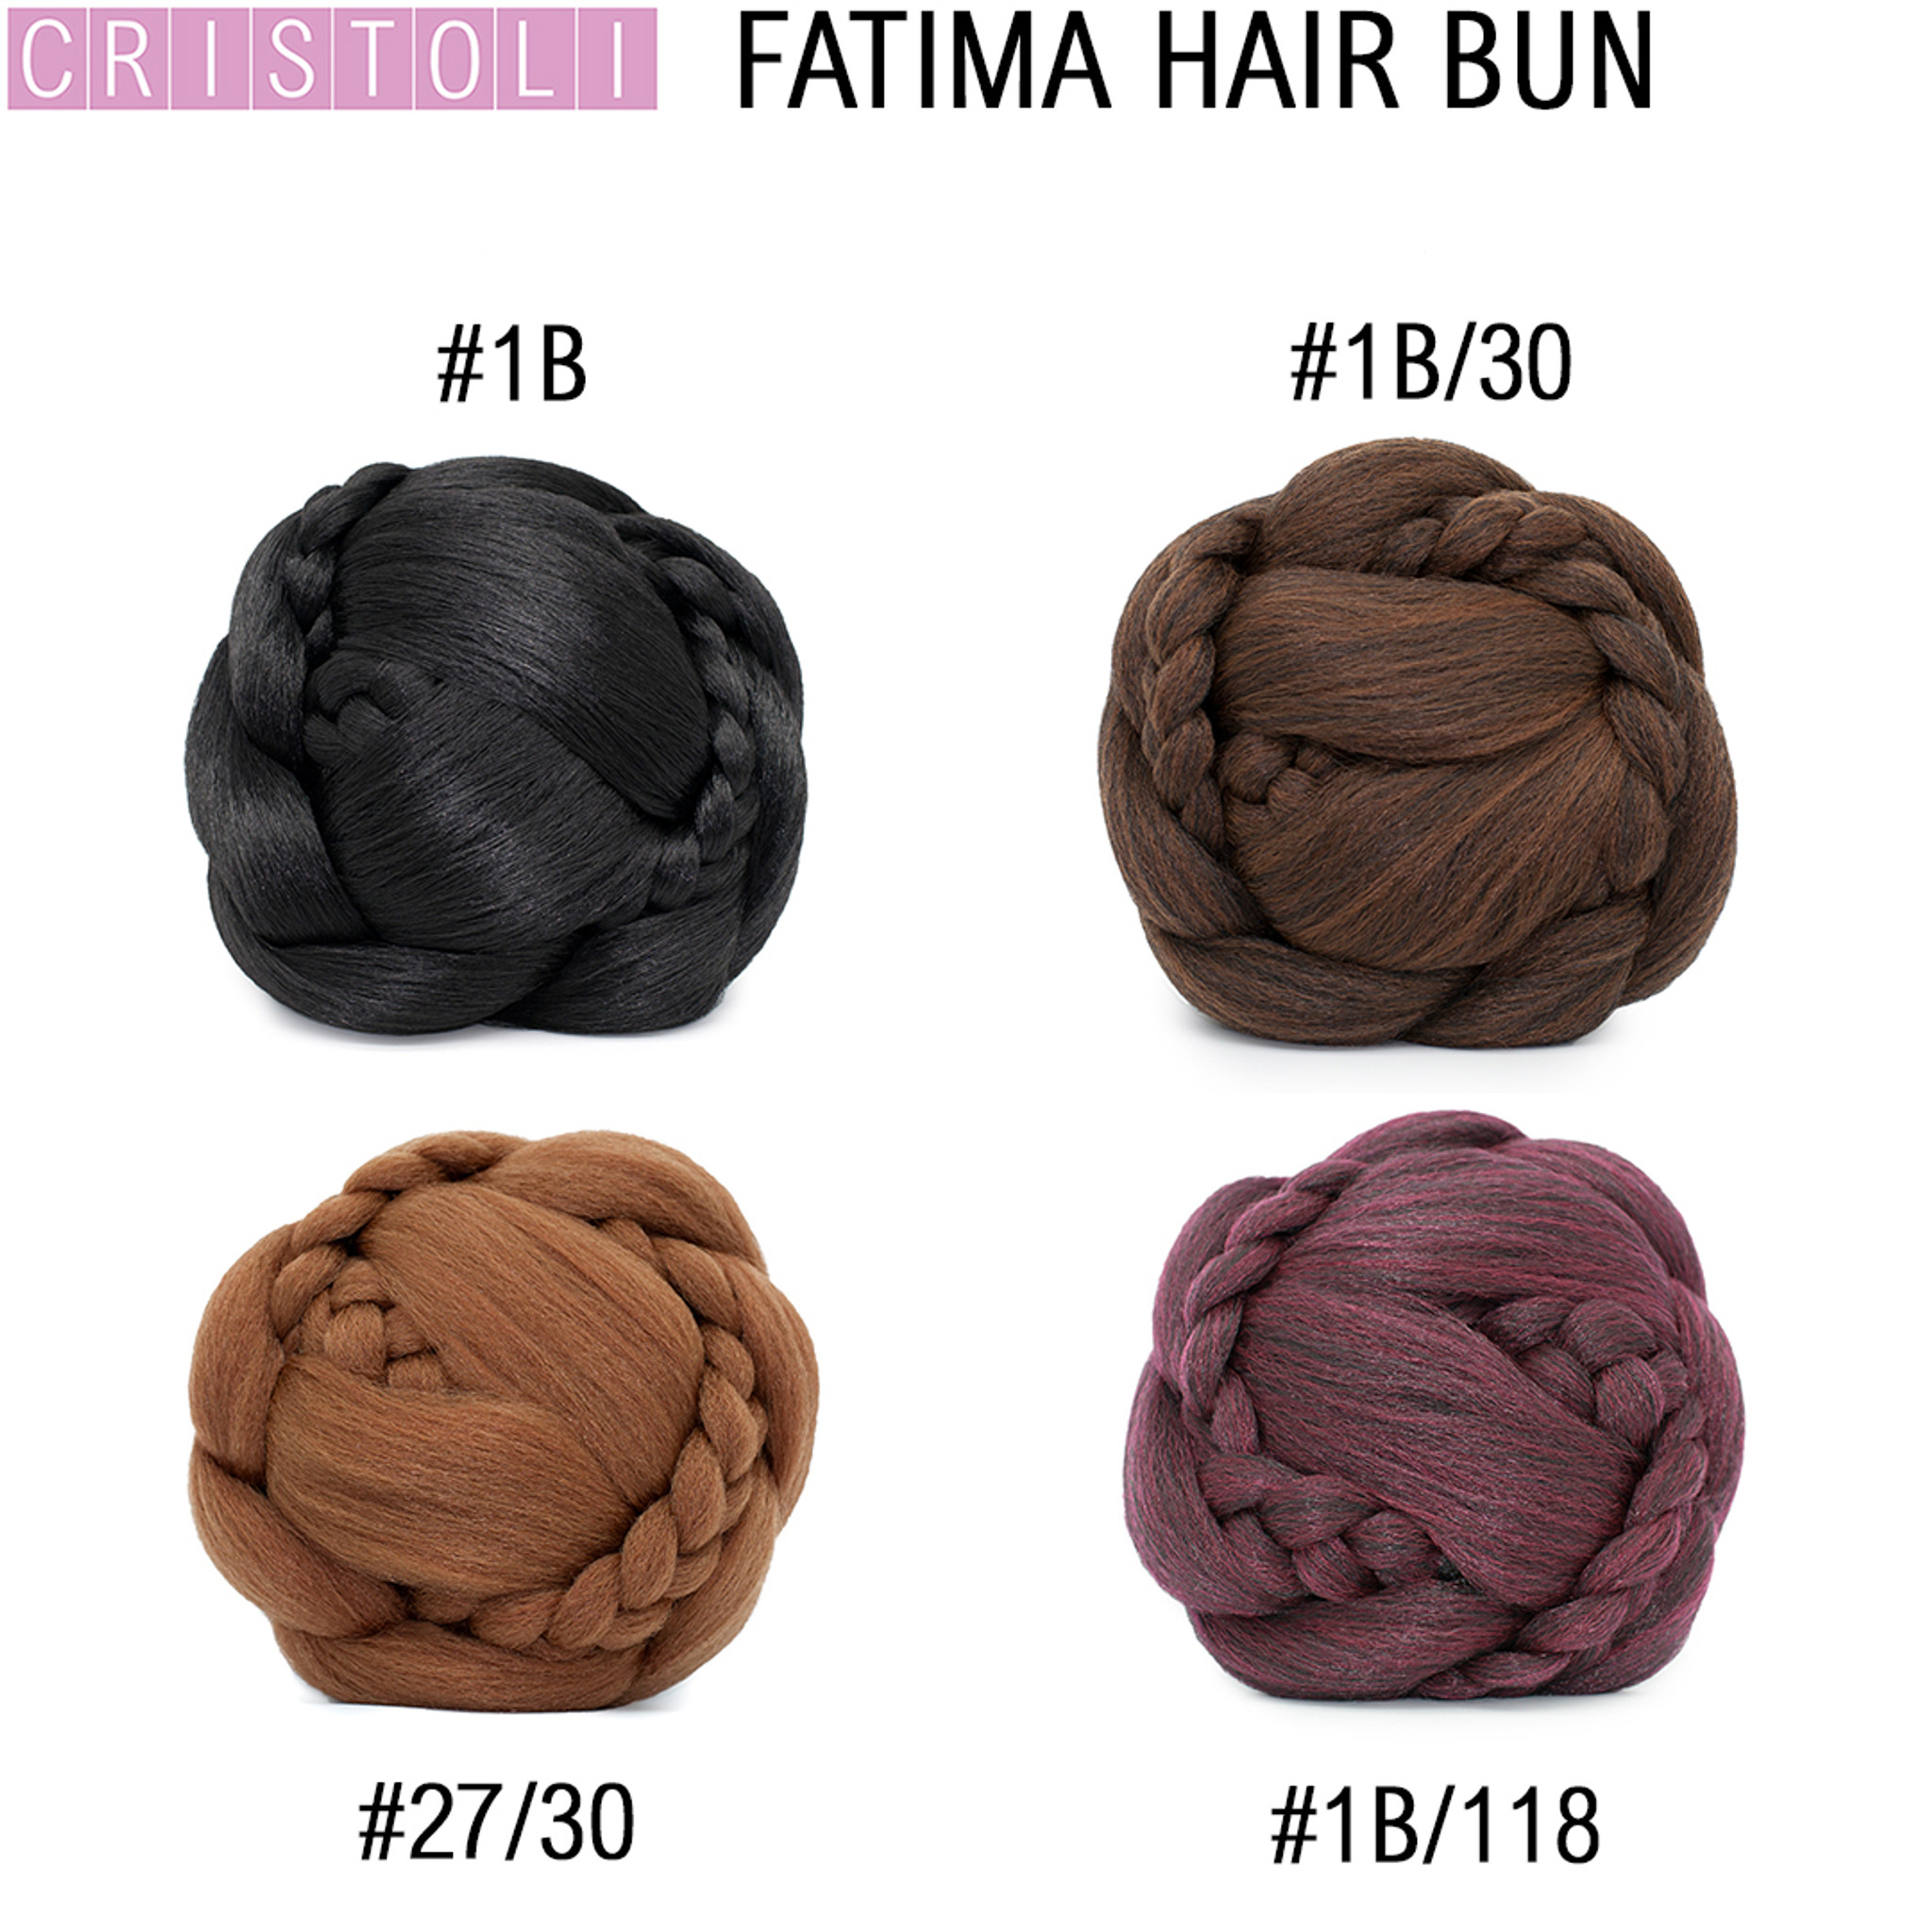 Cristoli FATIMA Hair Bun for Black Women Natural Hair Updo Wedding Hairstyles  Color Chart